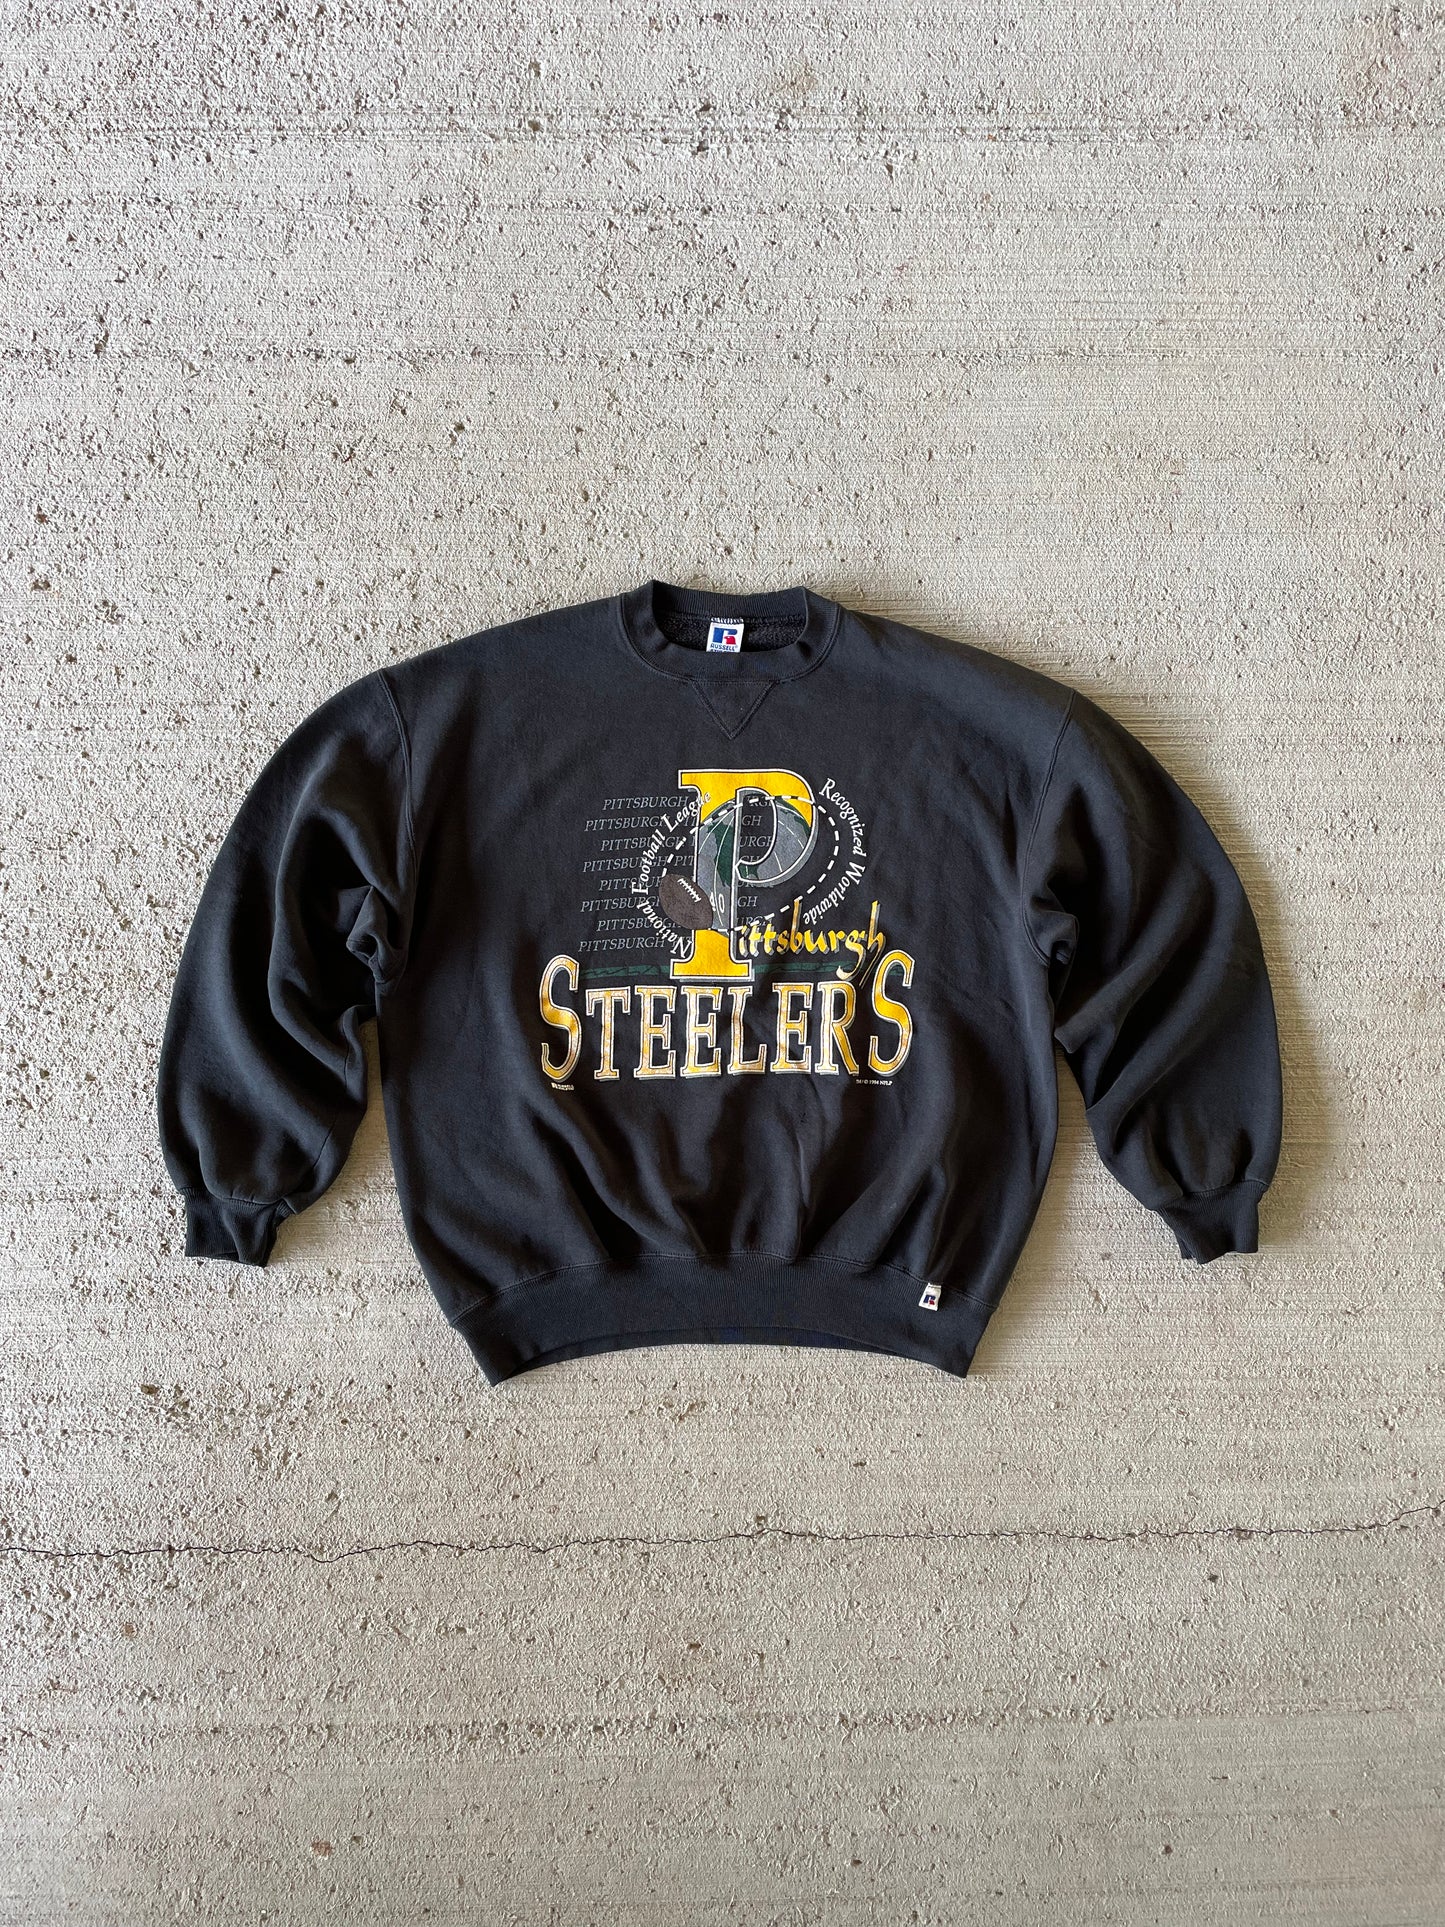 1994 Pittsburgh Steelers Crewneck